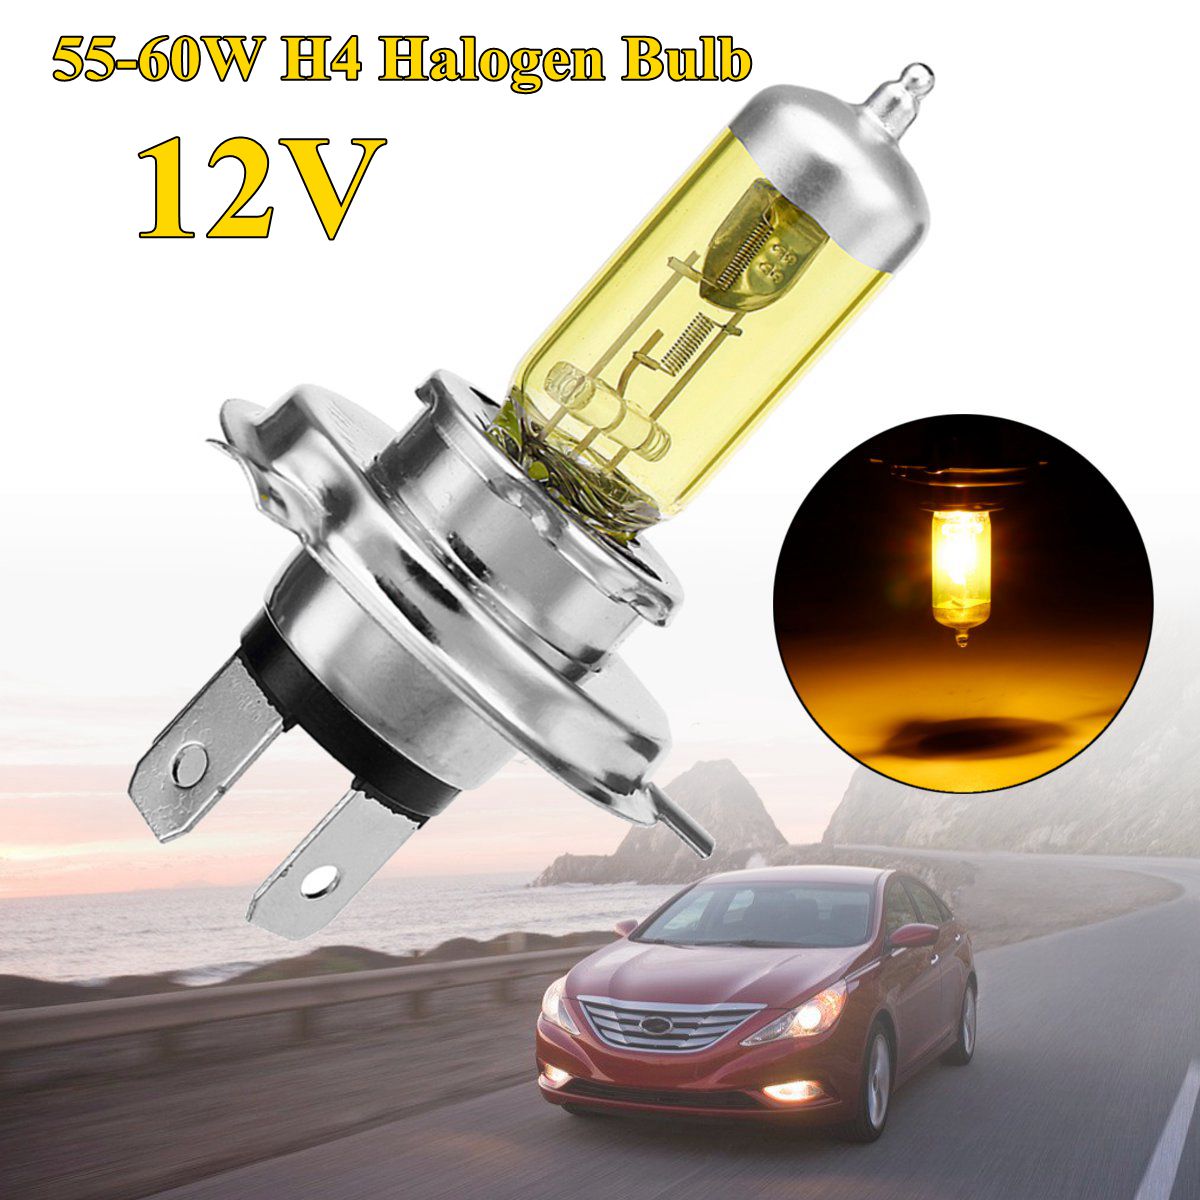 1PCS-Golden-H4-Car-Halogen-Headlights-Front-Fog-Driving-Light-Bulb-Lamp-55-60W-1000LM-1344799